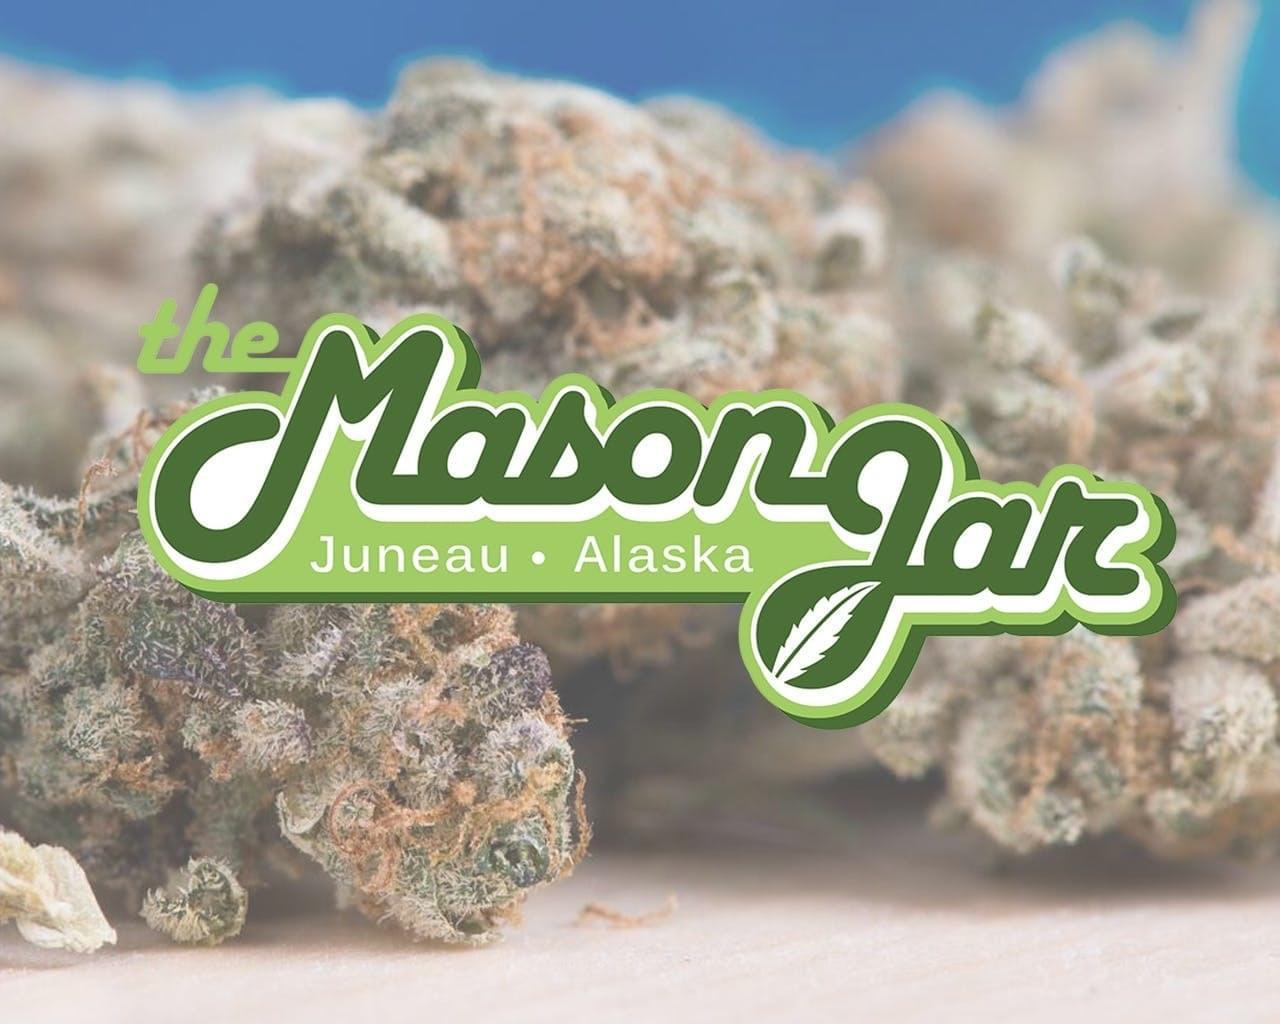 The Mason Jar logo